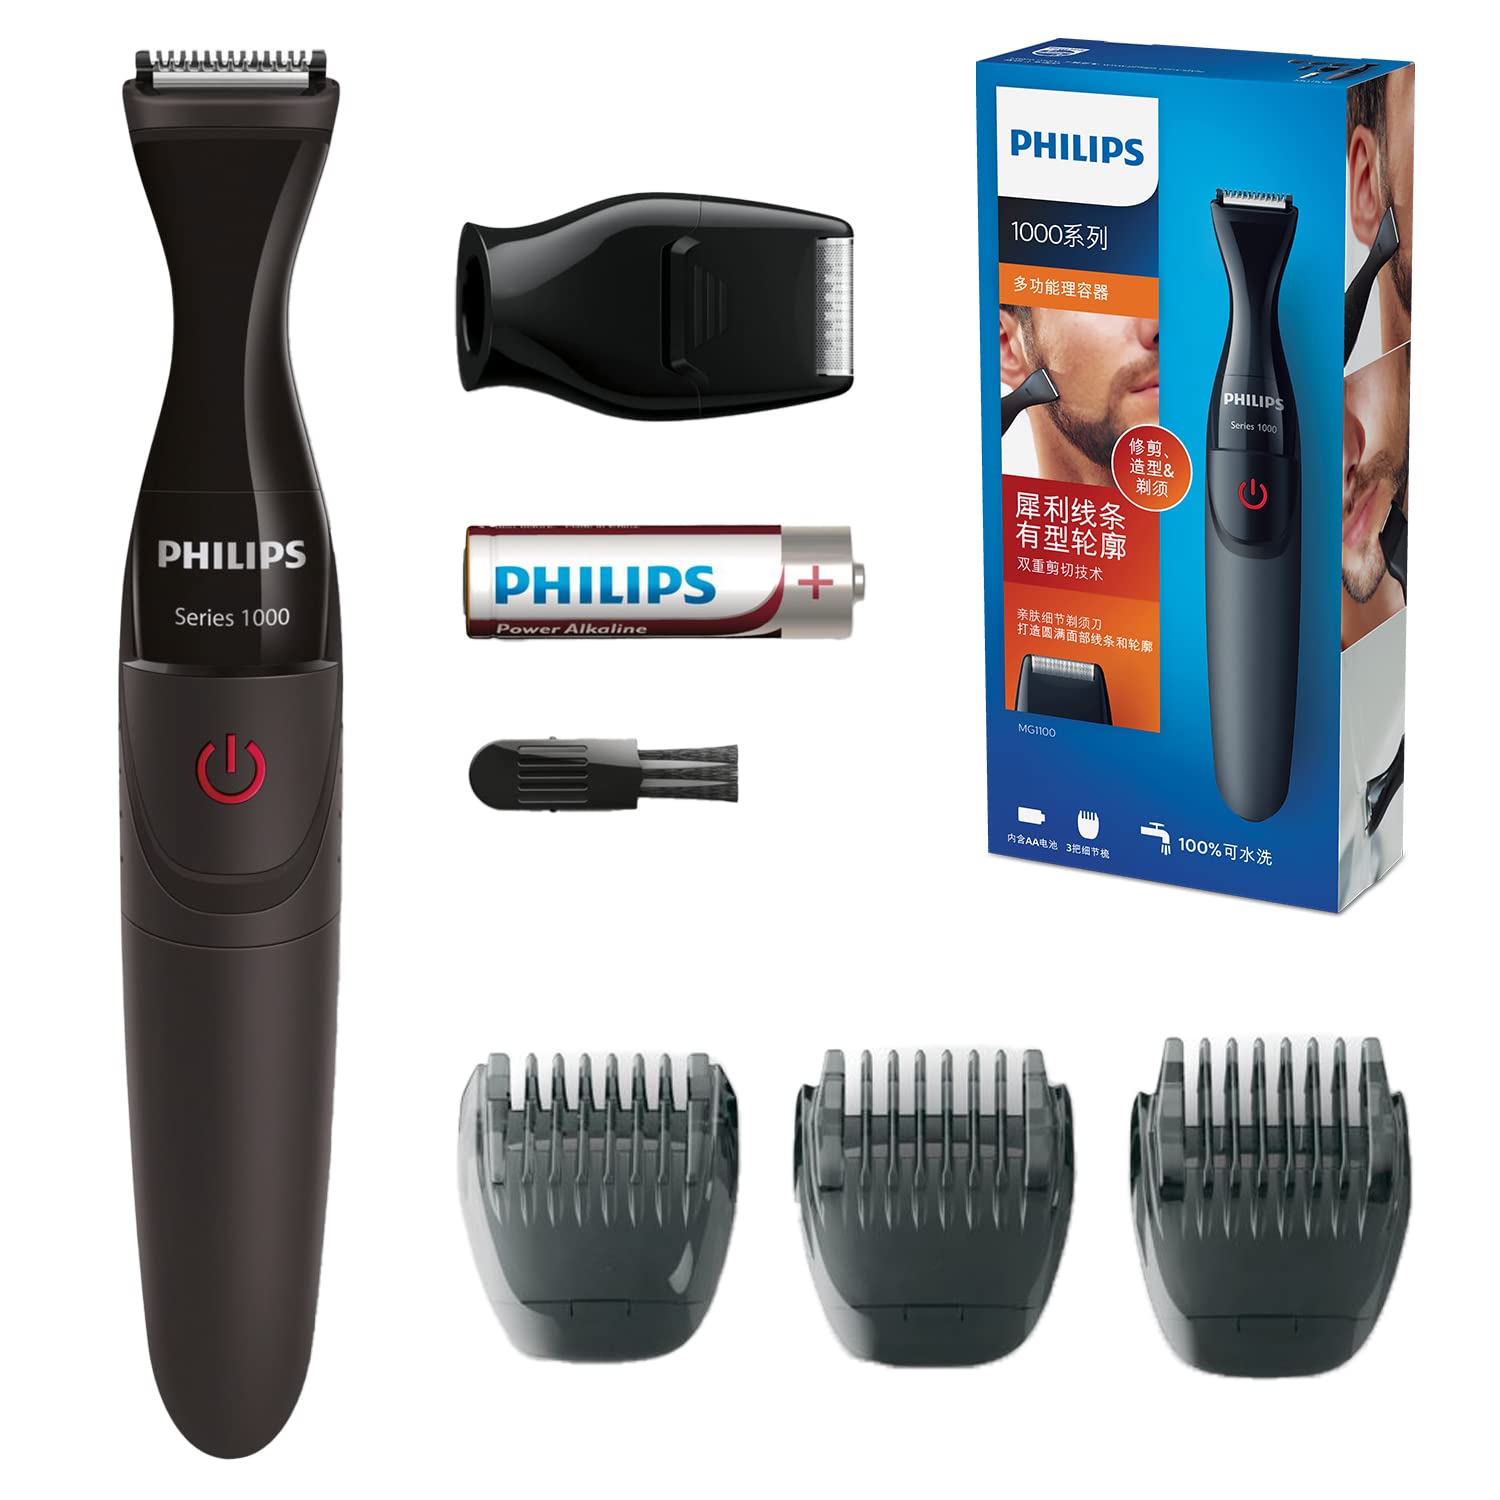 Philips Multigroom Series 1000 Ultra Precise Beard Styler With Dualcut Technology For Men, Mg110016. 1 Years Warranty